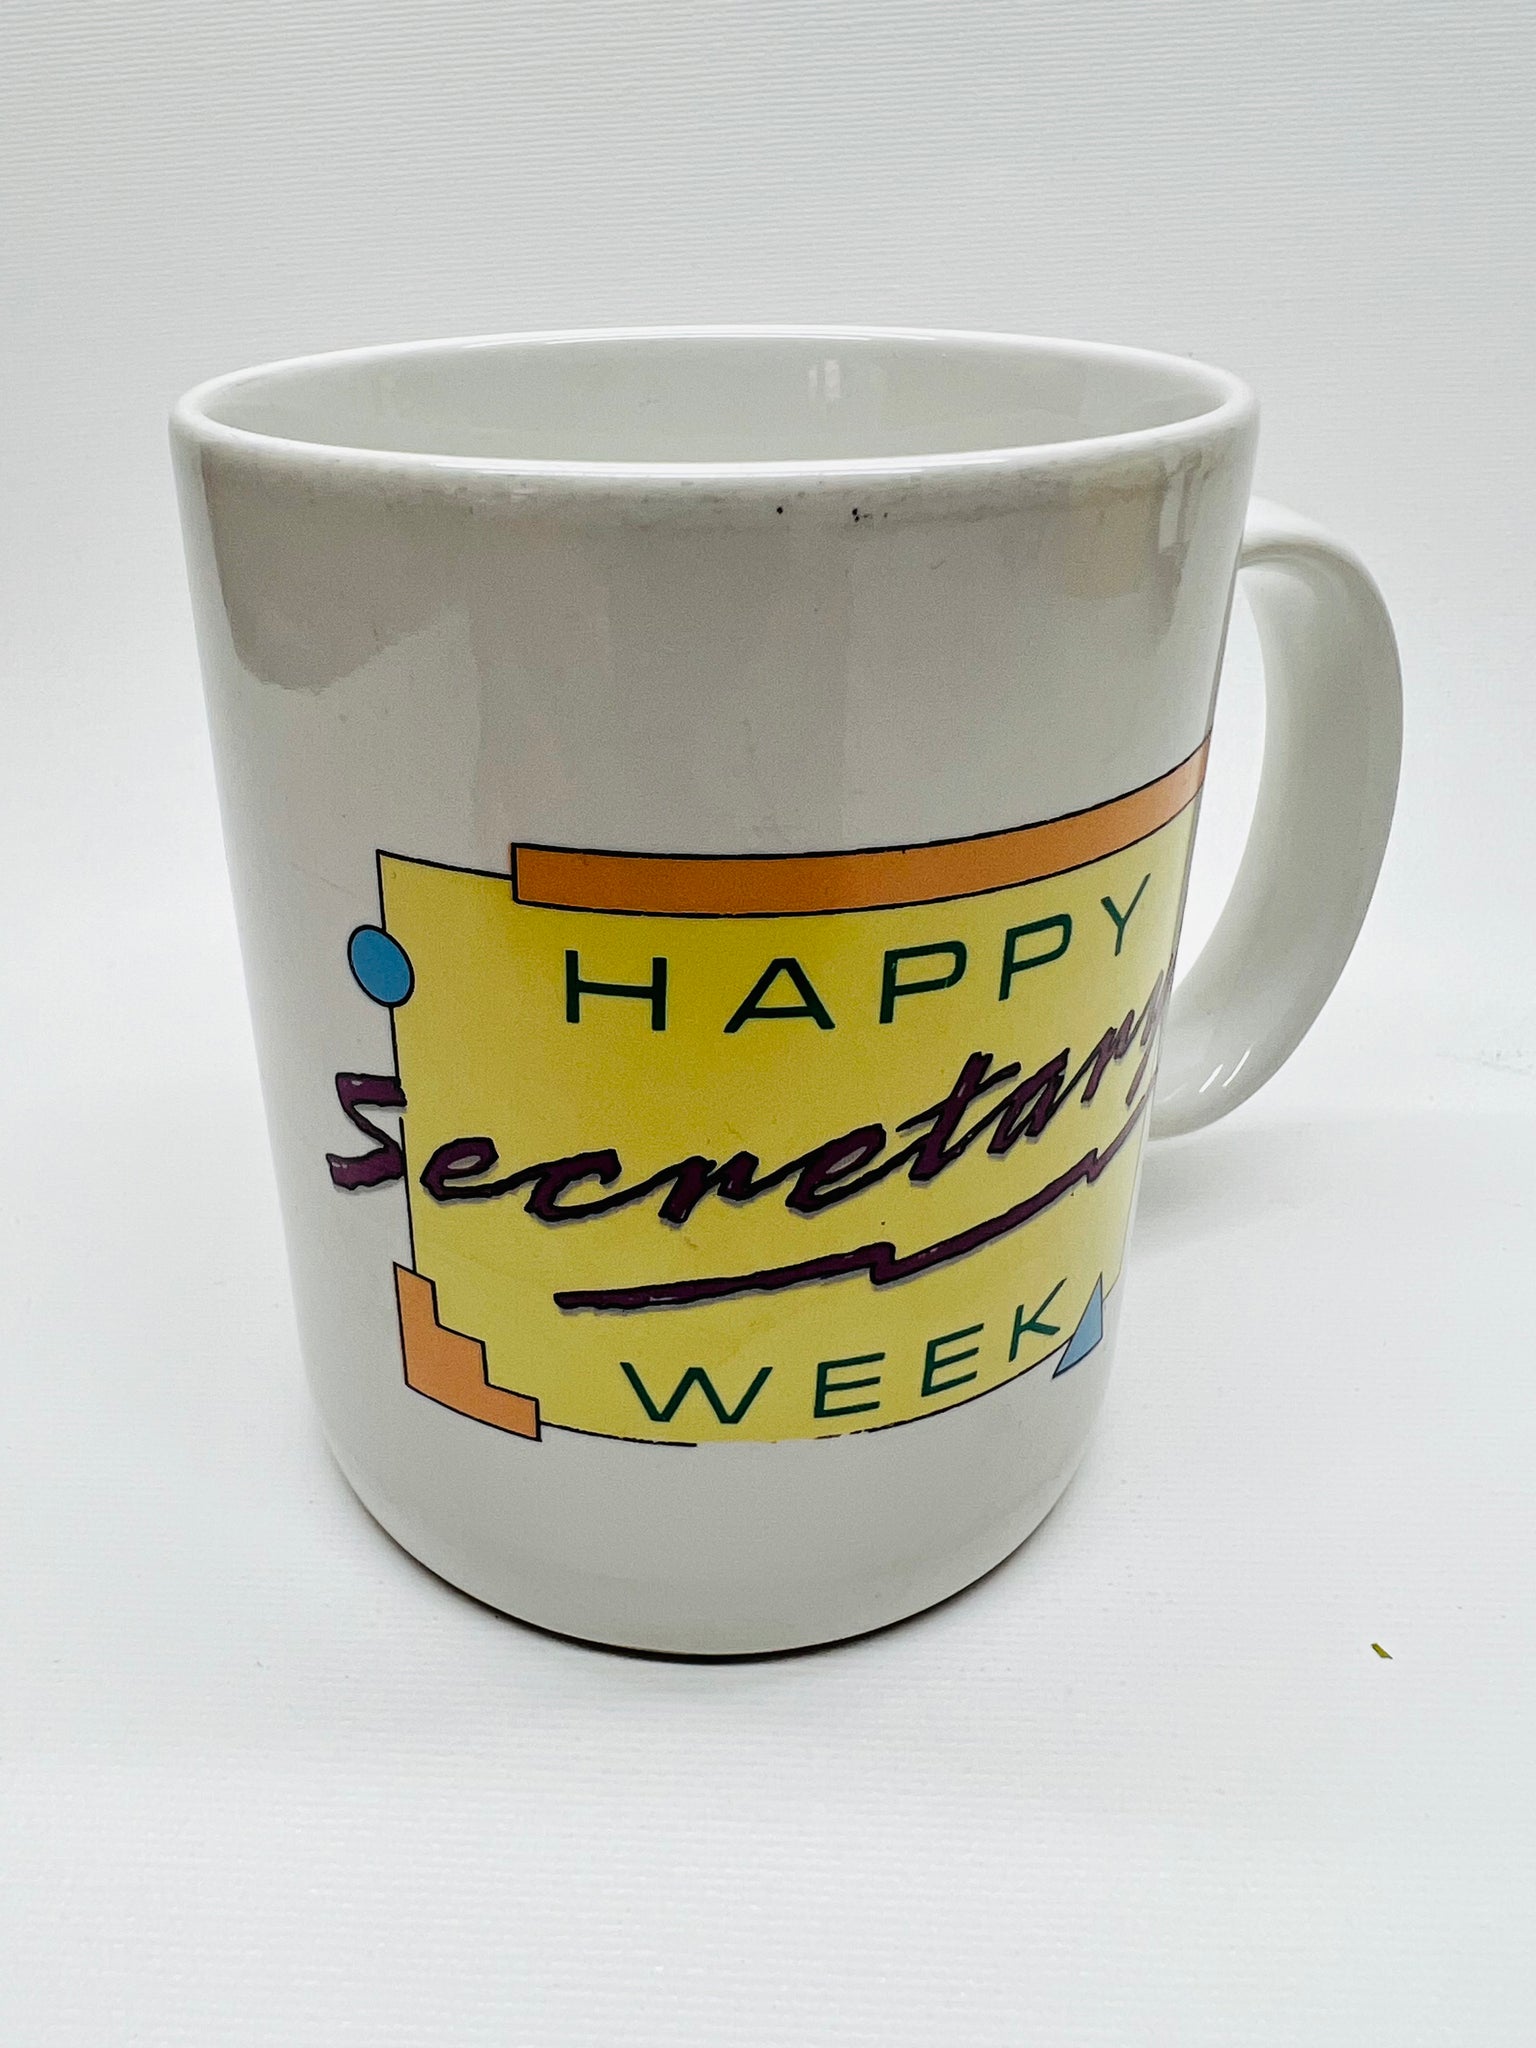 Happy Secretary Week Mug